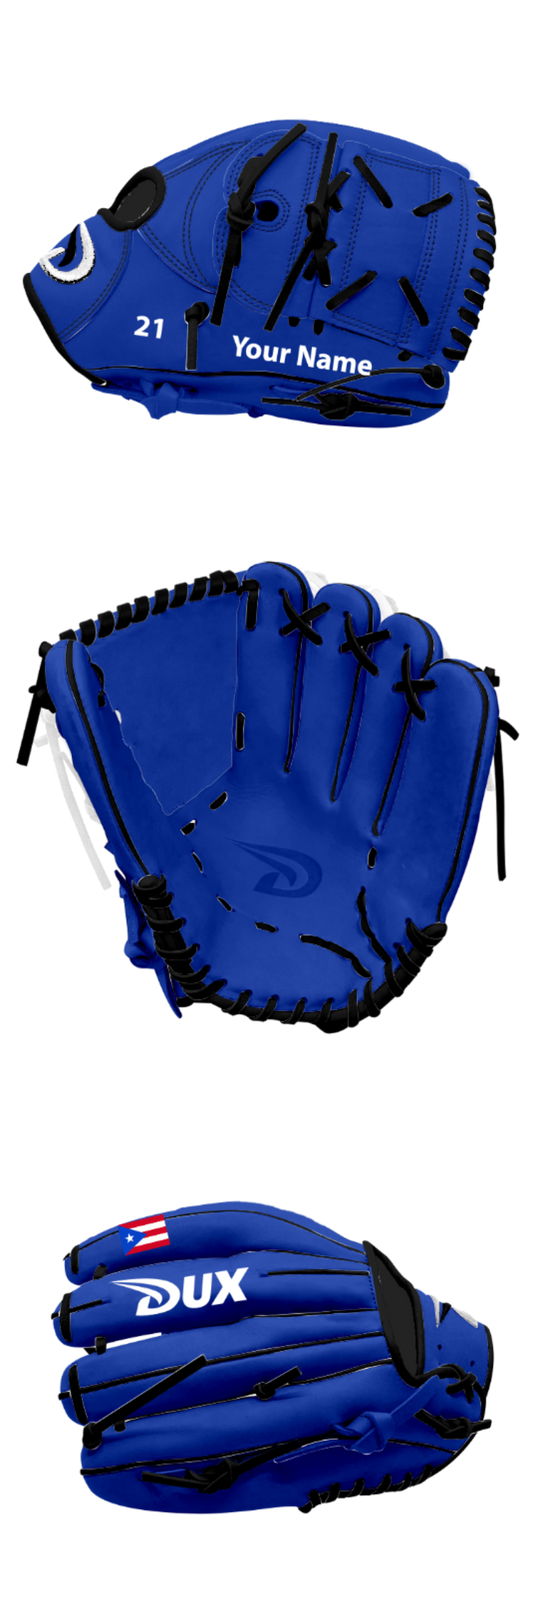 Dux Sports Custom Gloves - English - Customer's Product with price 199.98 ID oV2Y6yEBW8jZ-8ho2KJxmd_B